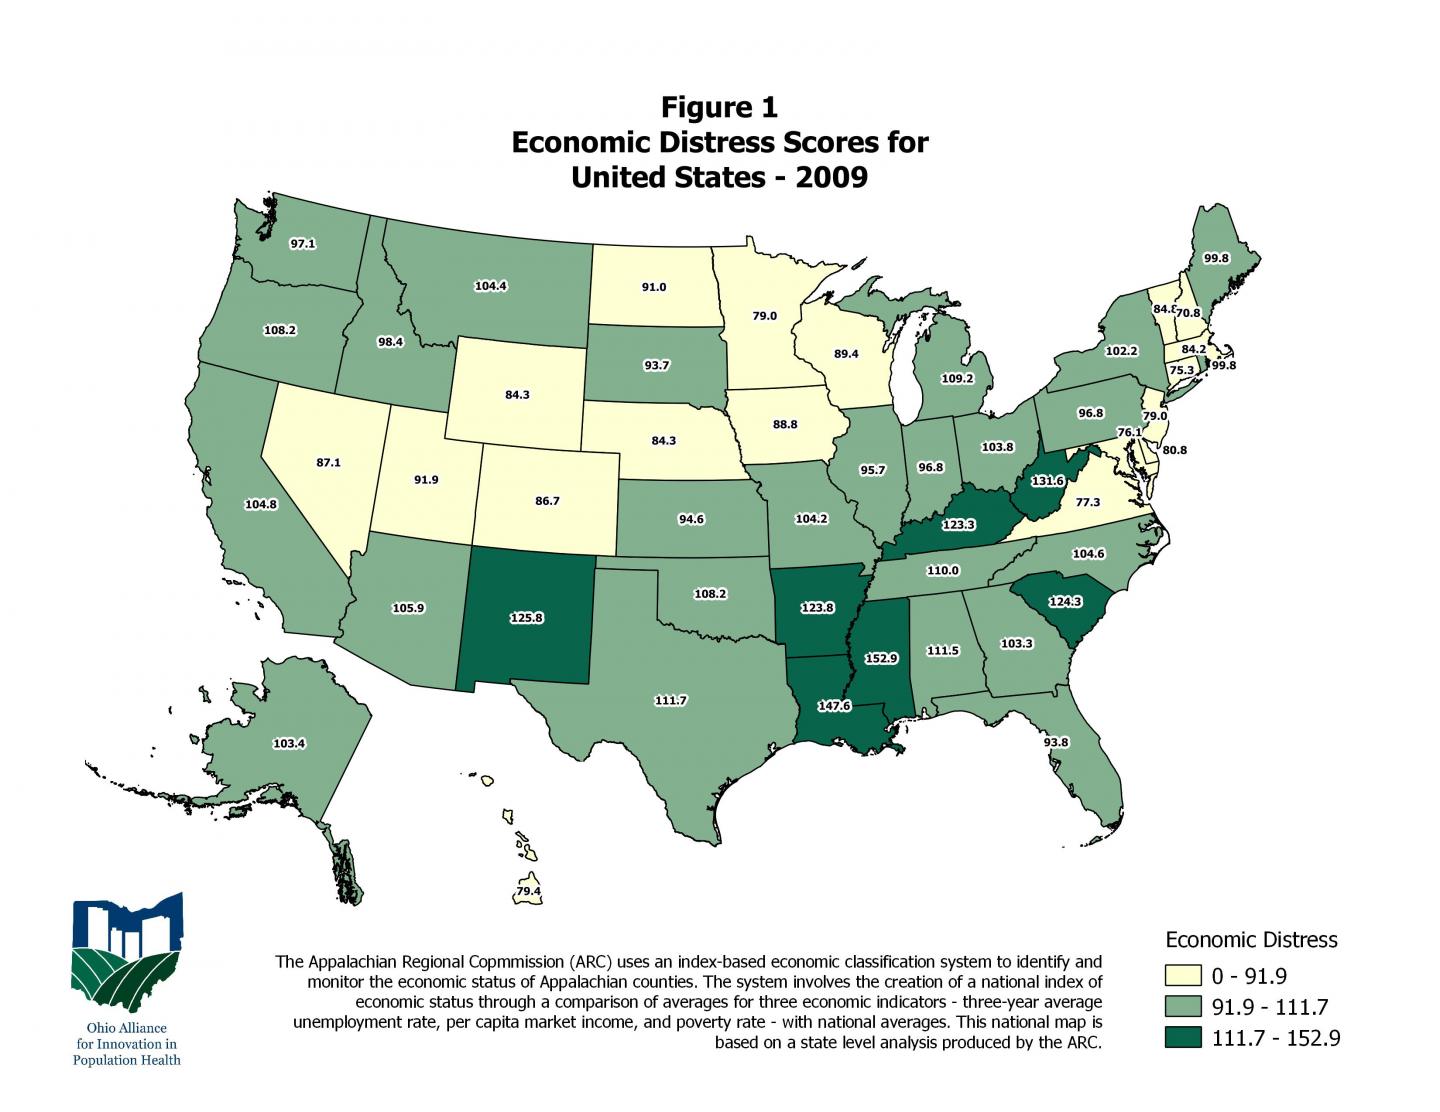 Economic Distress Scores for United States, 2009